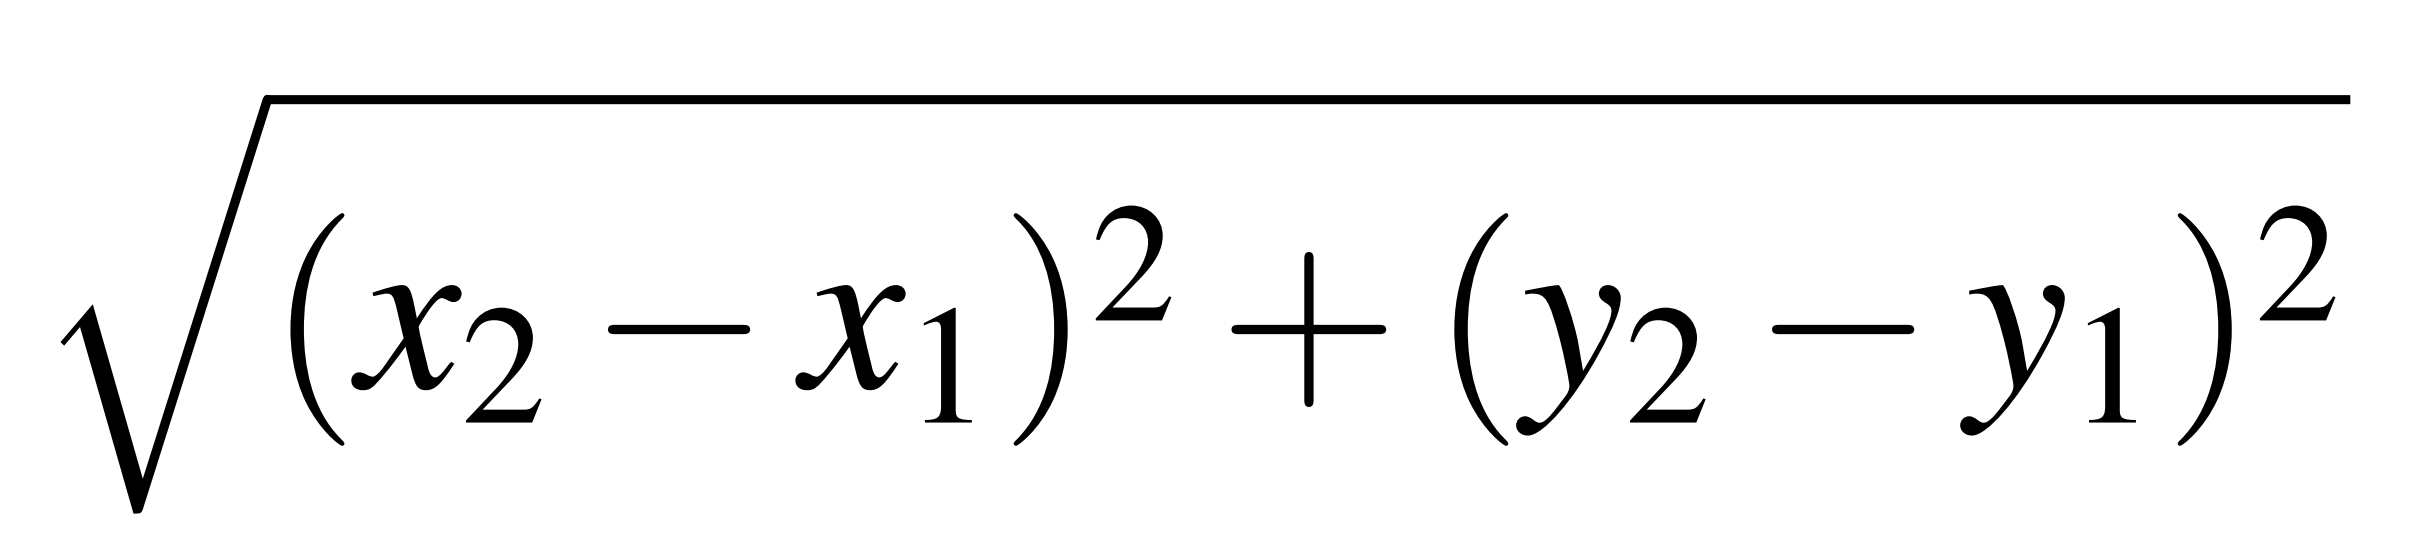 Distance formula